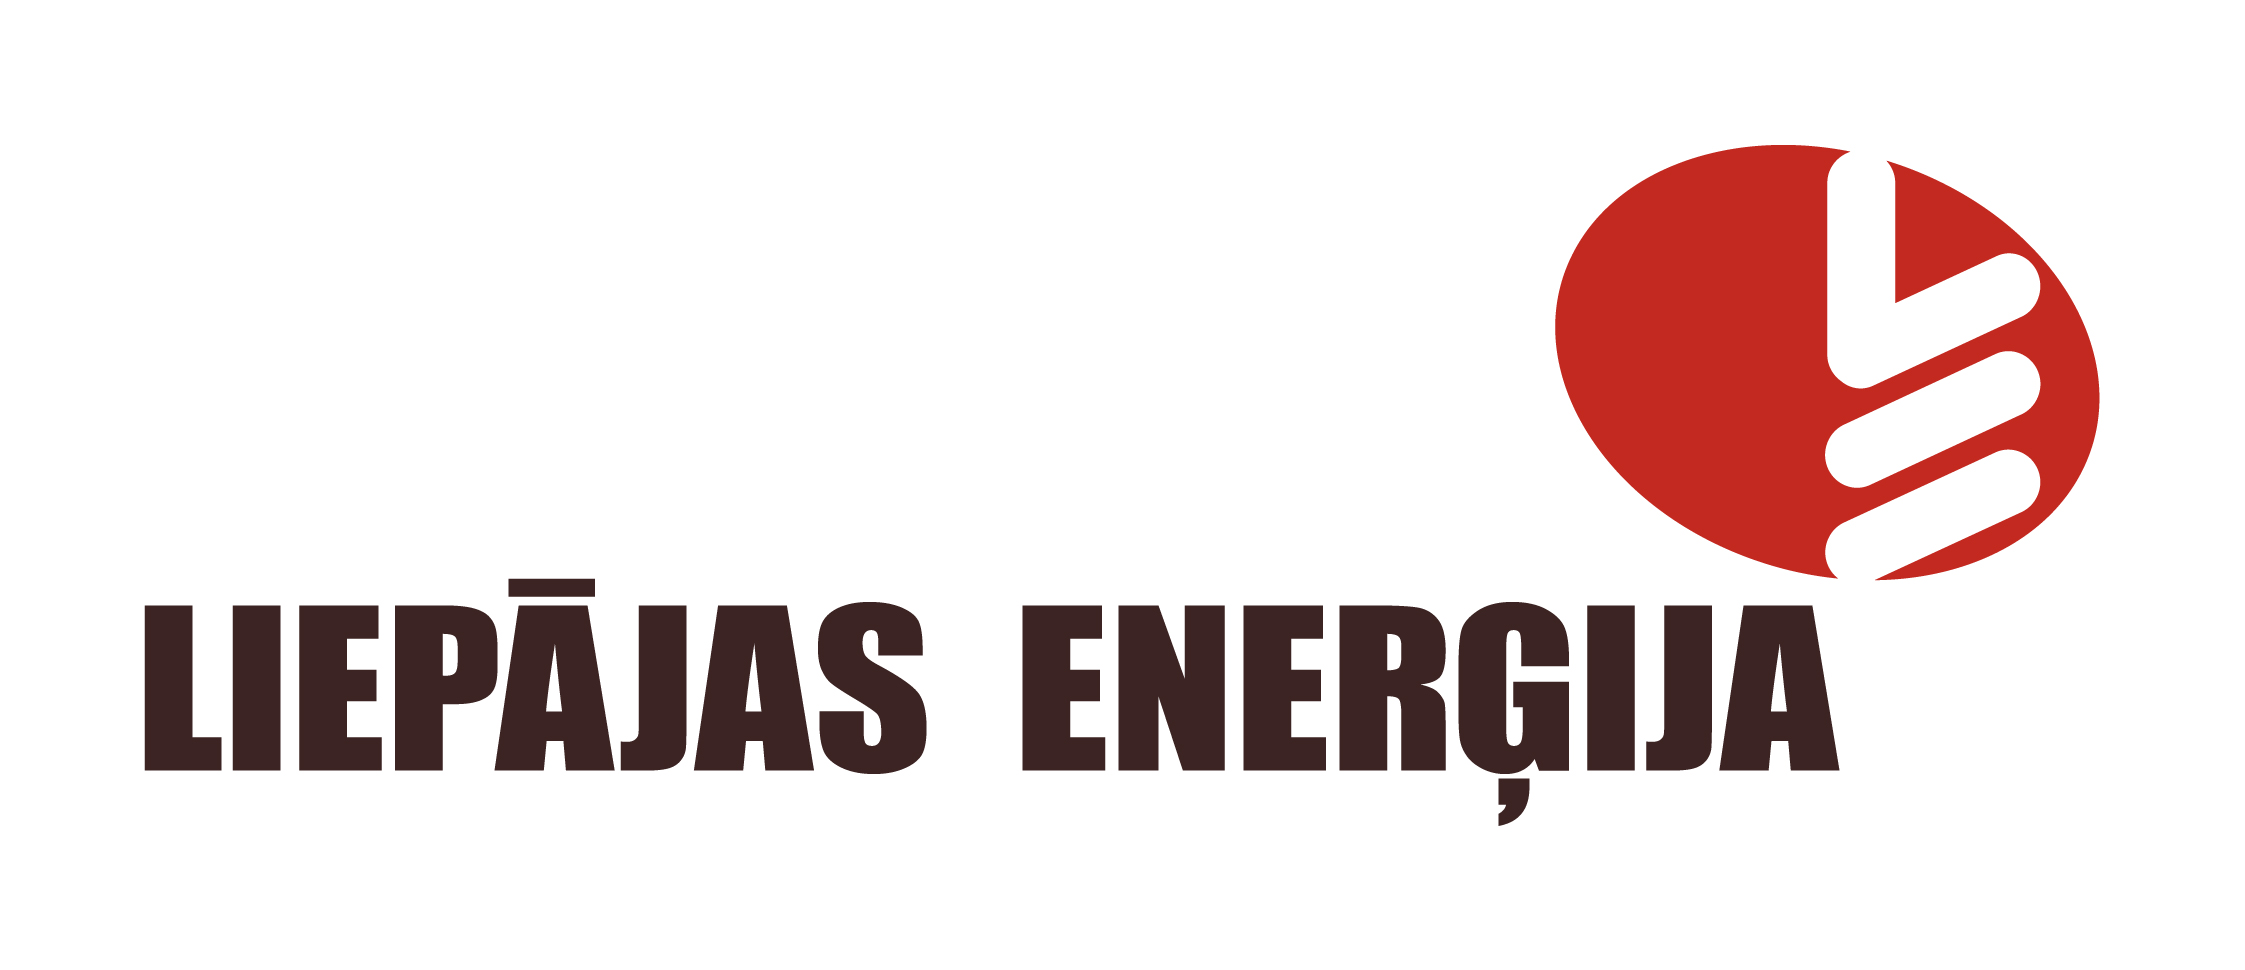 Liepajas energija Latvia